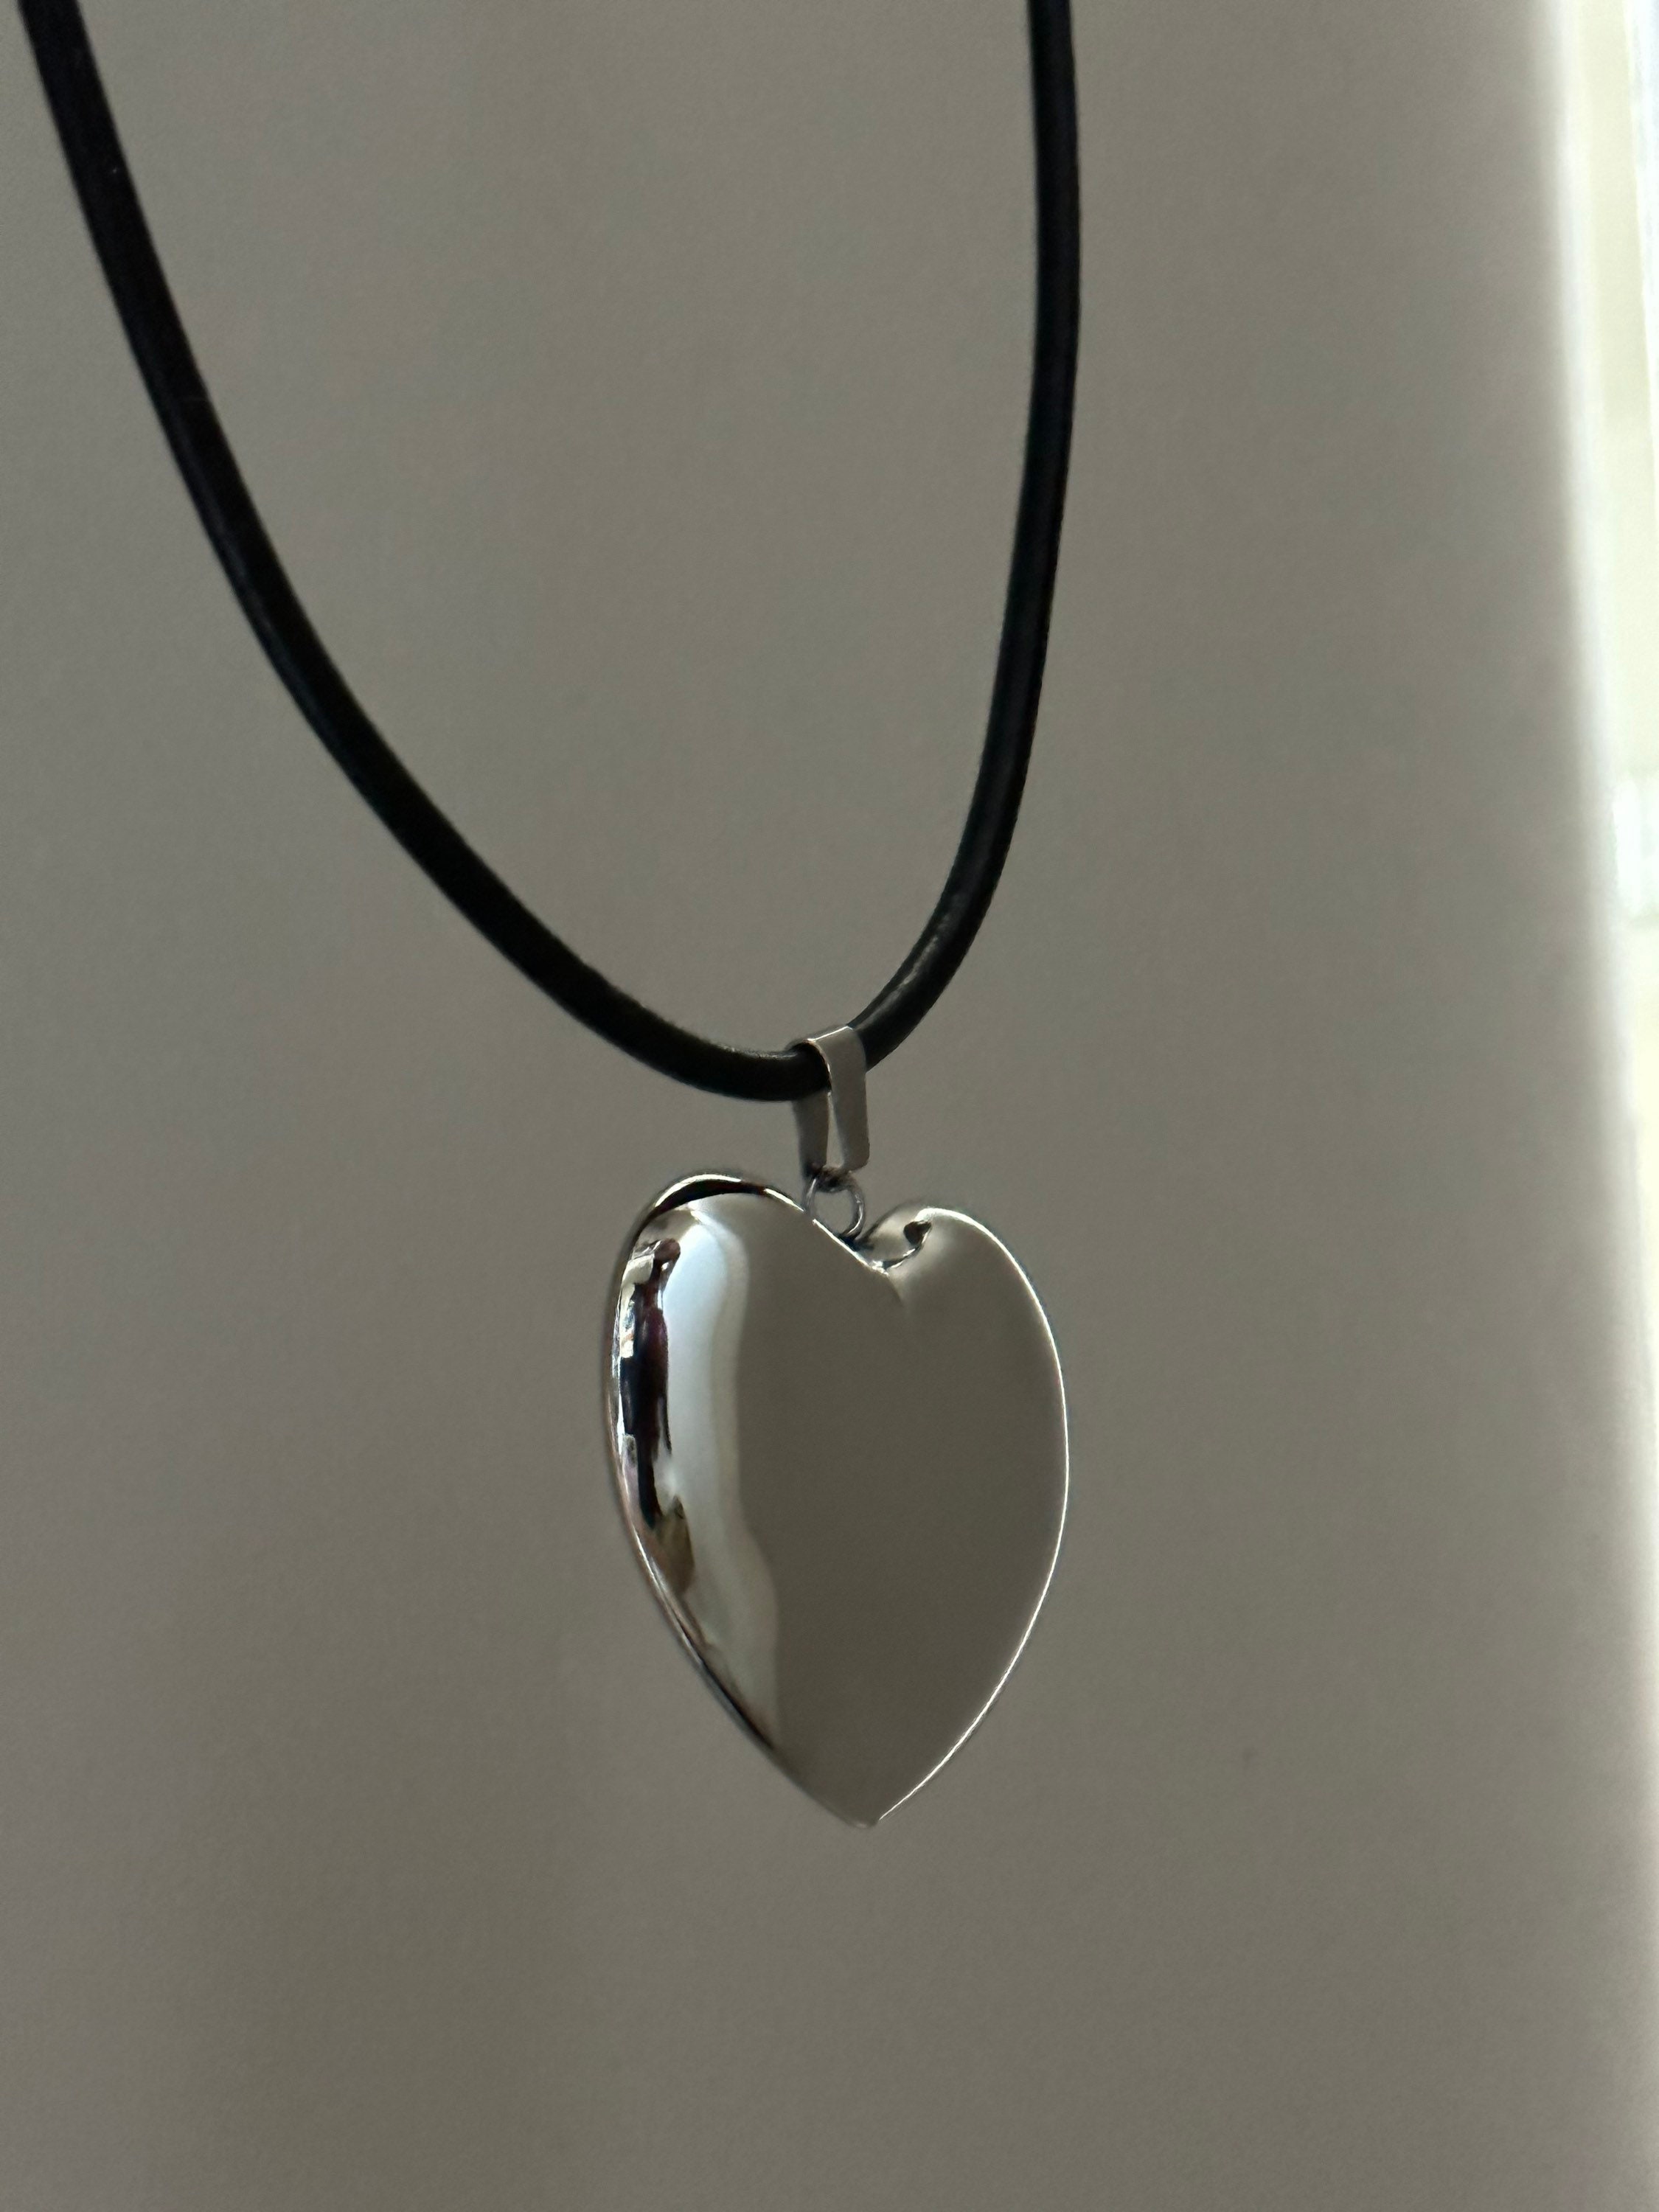 10 Necklace Cords for Pendants Black Satin Handmade 18 Silver Pl